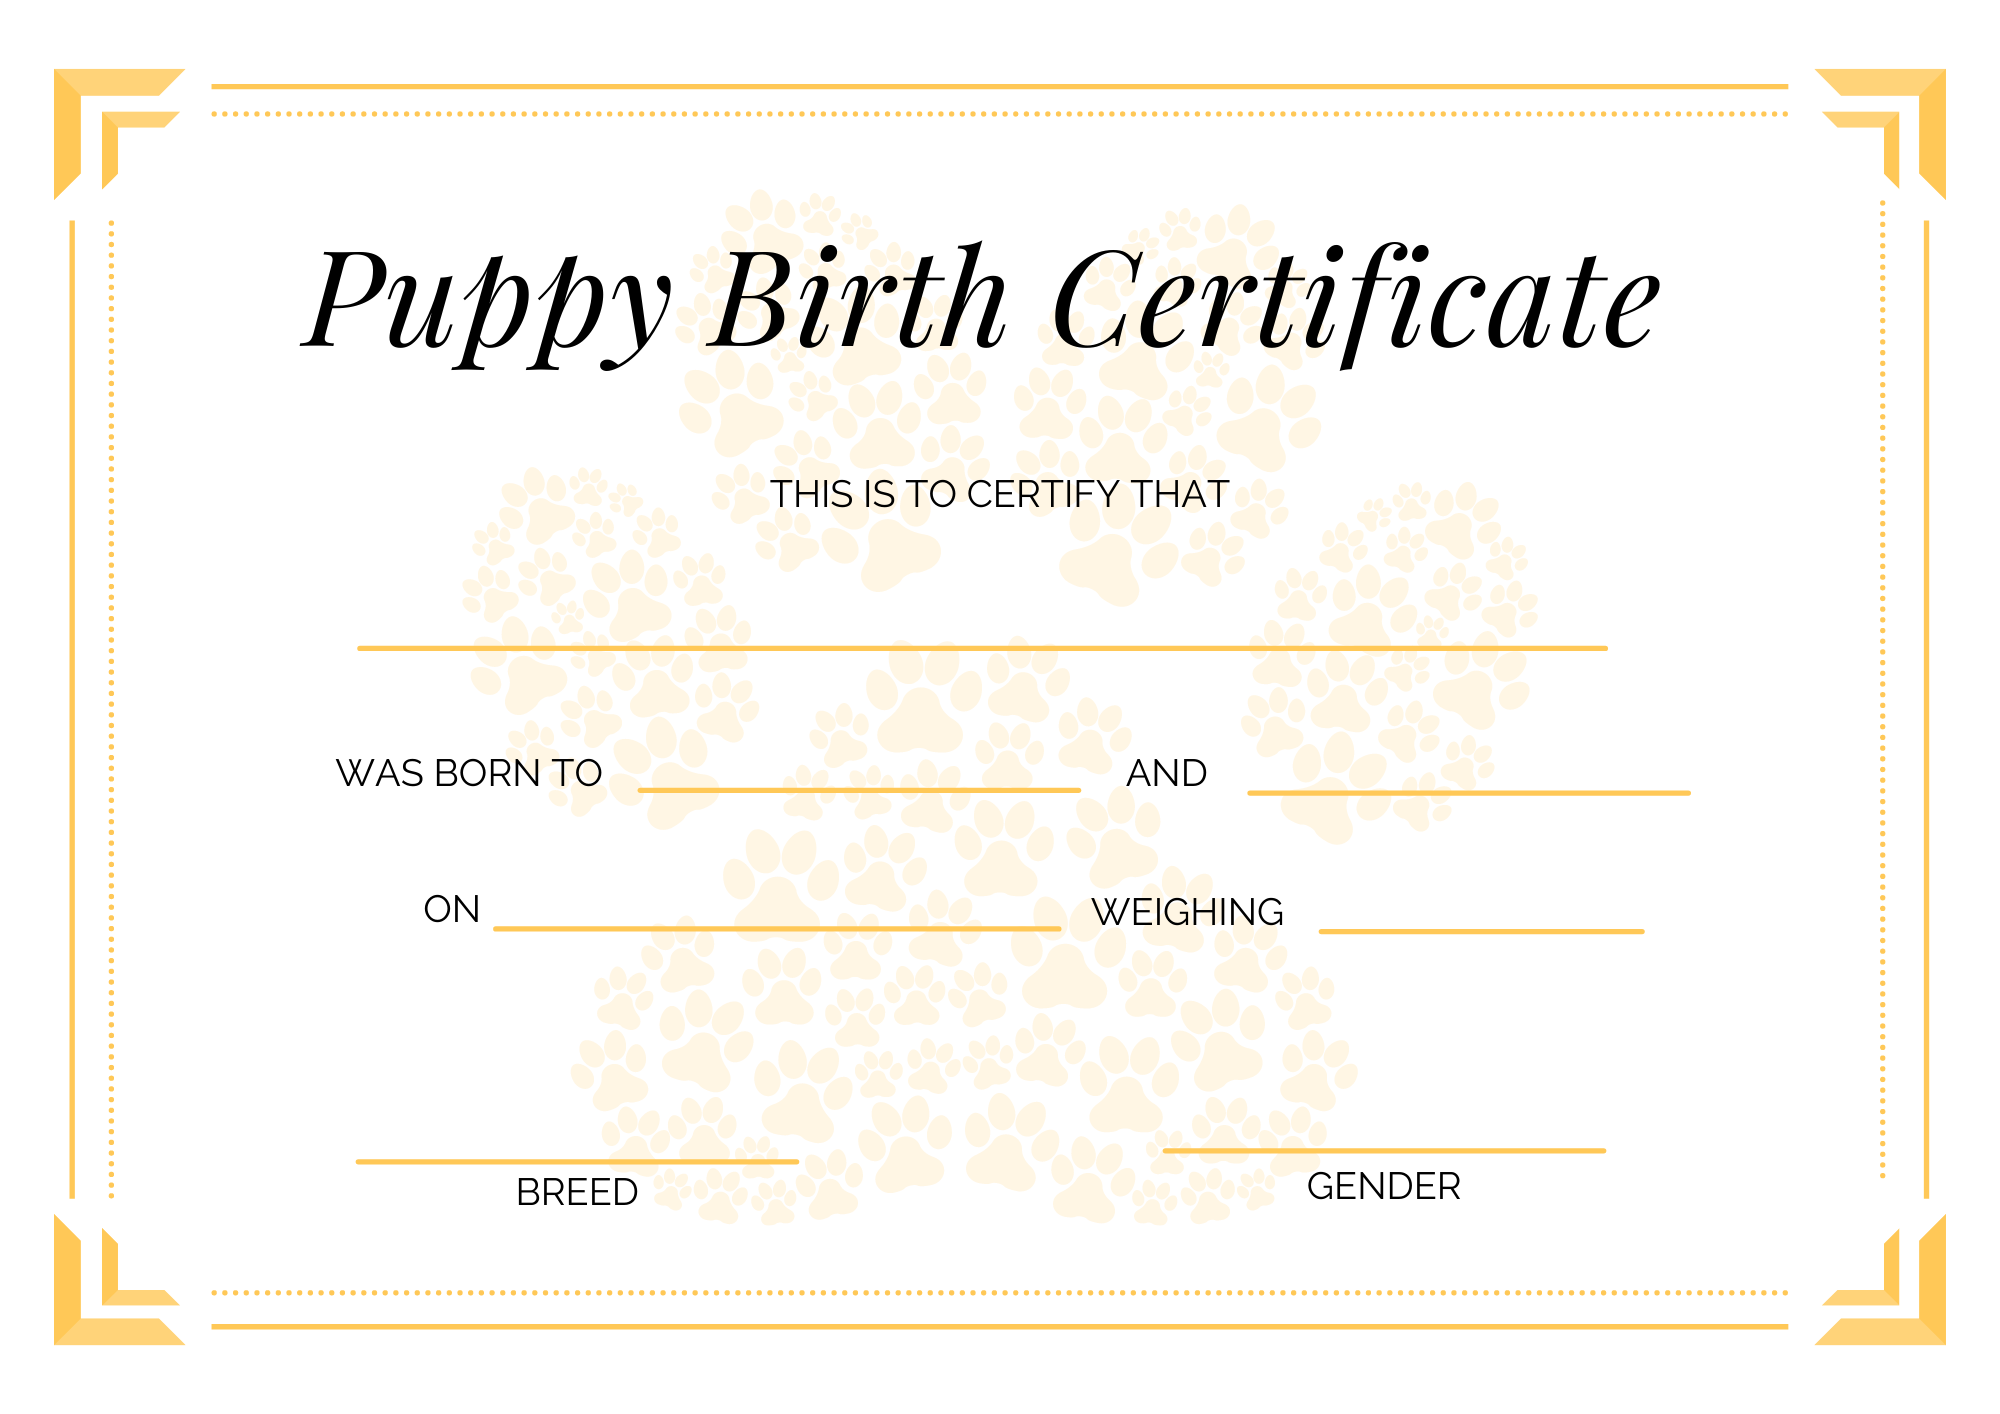 cuddla-puppy-birth-certificate-yellow